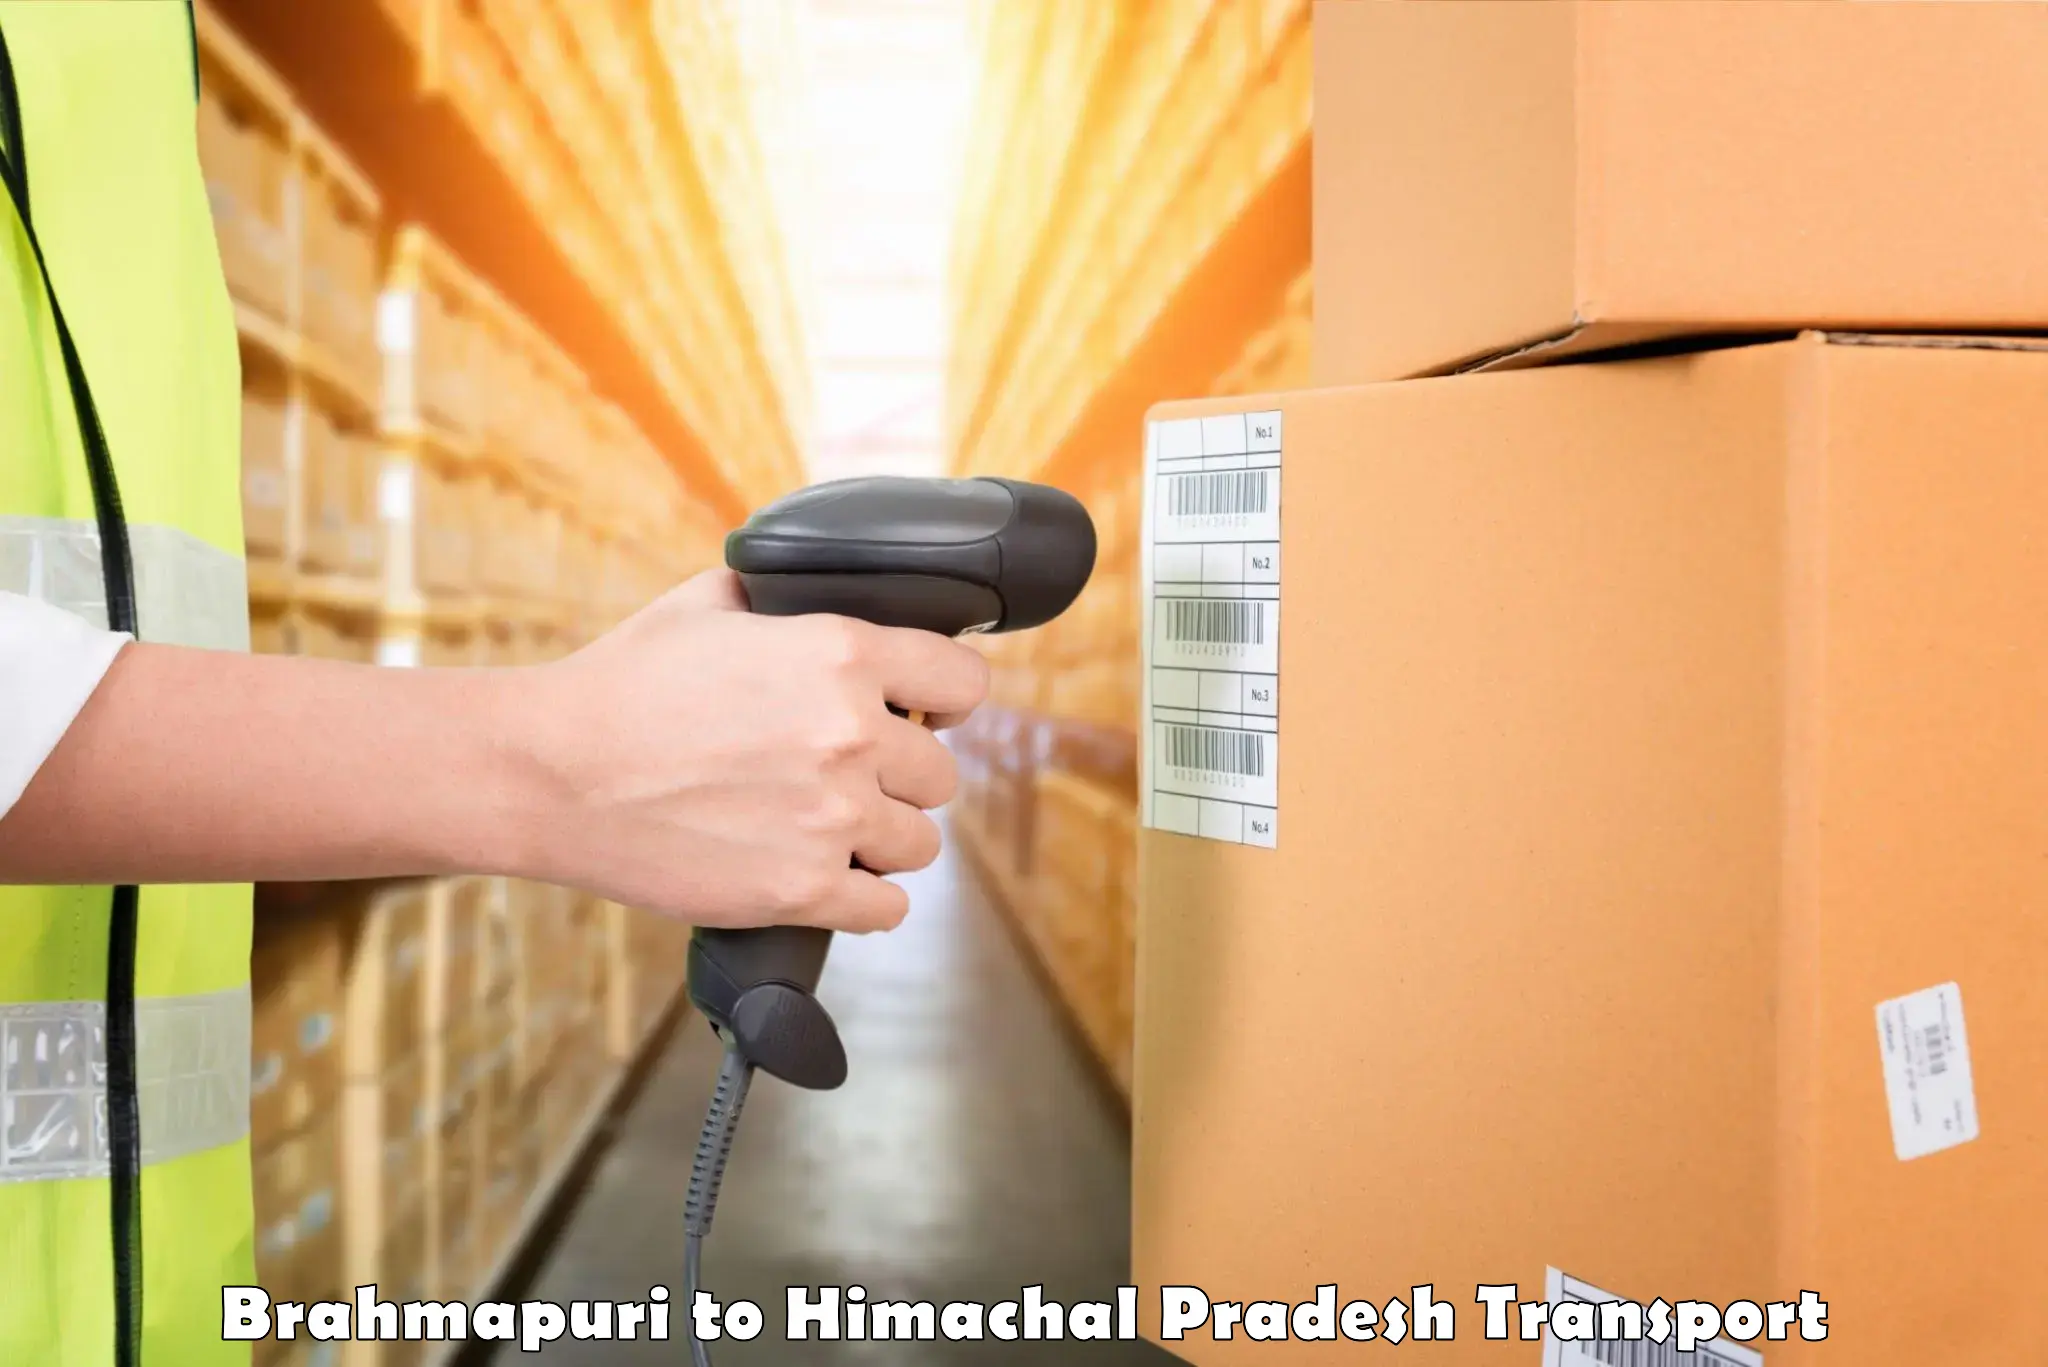 Truck transport companies in India Brahmapuri to Dheera